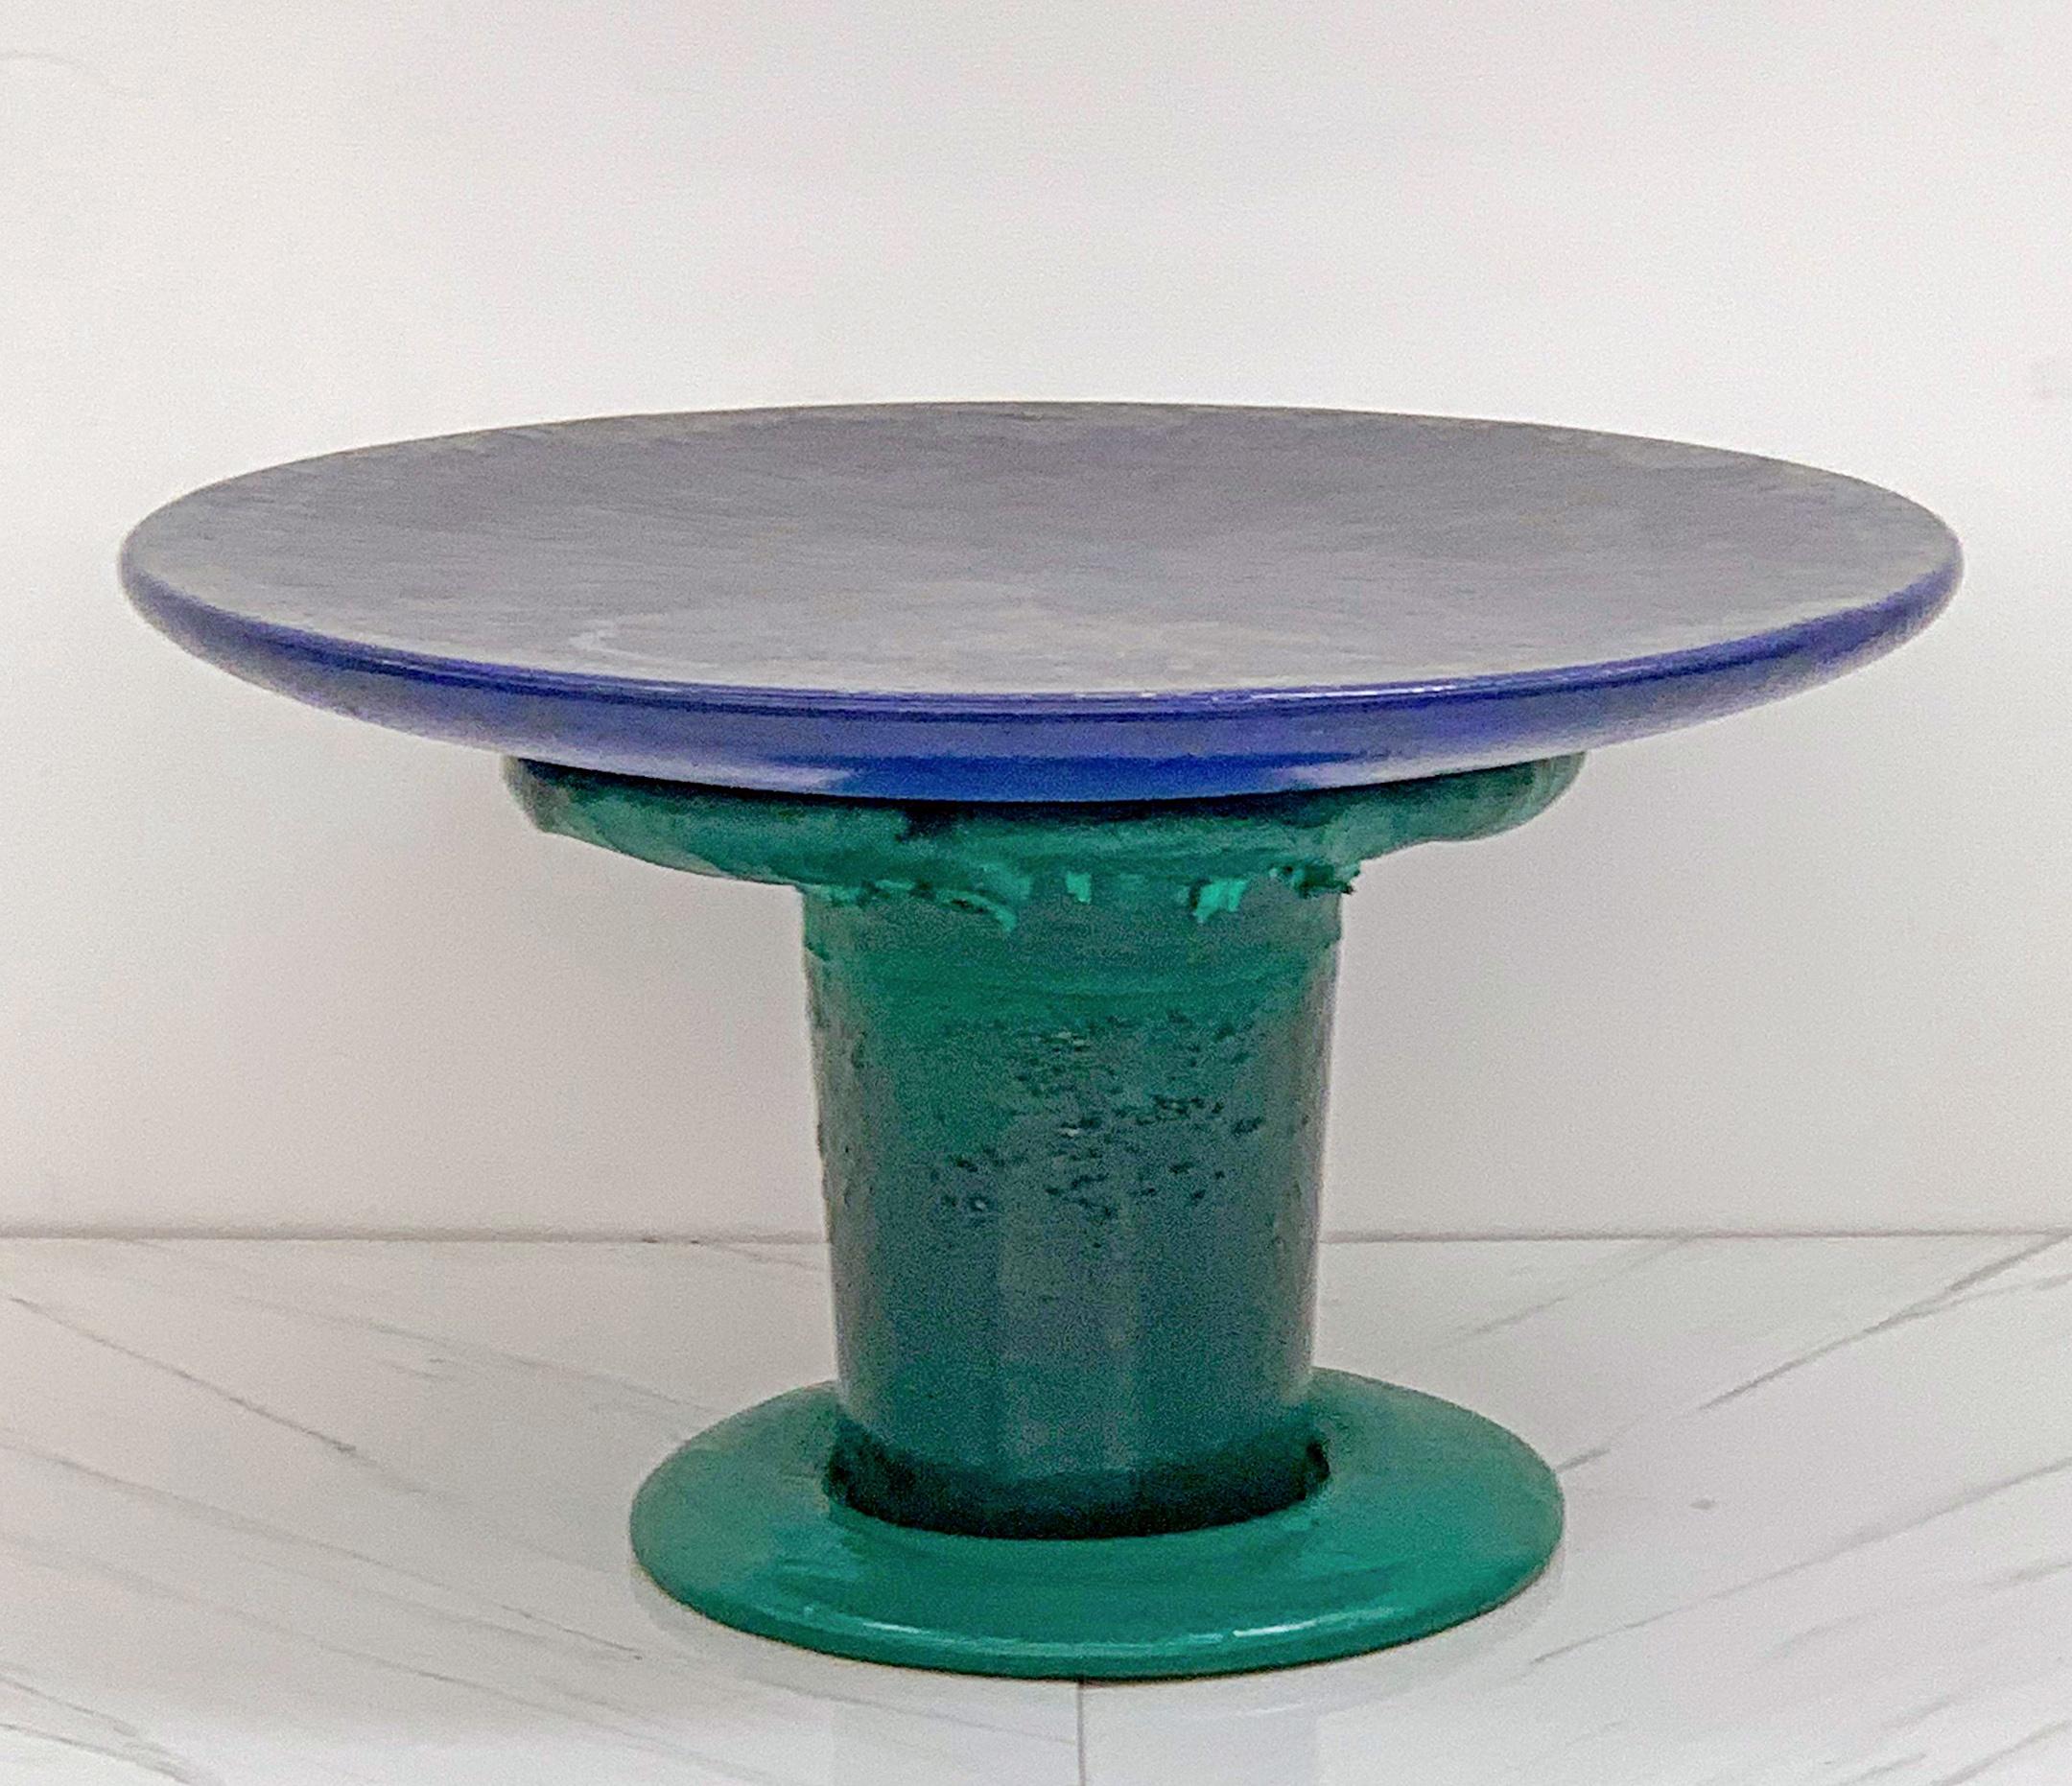 Post-Modern Sunburst Mushroom Table in Green and Blue, Louis Durot, 1990's For Sale